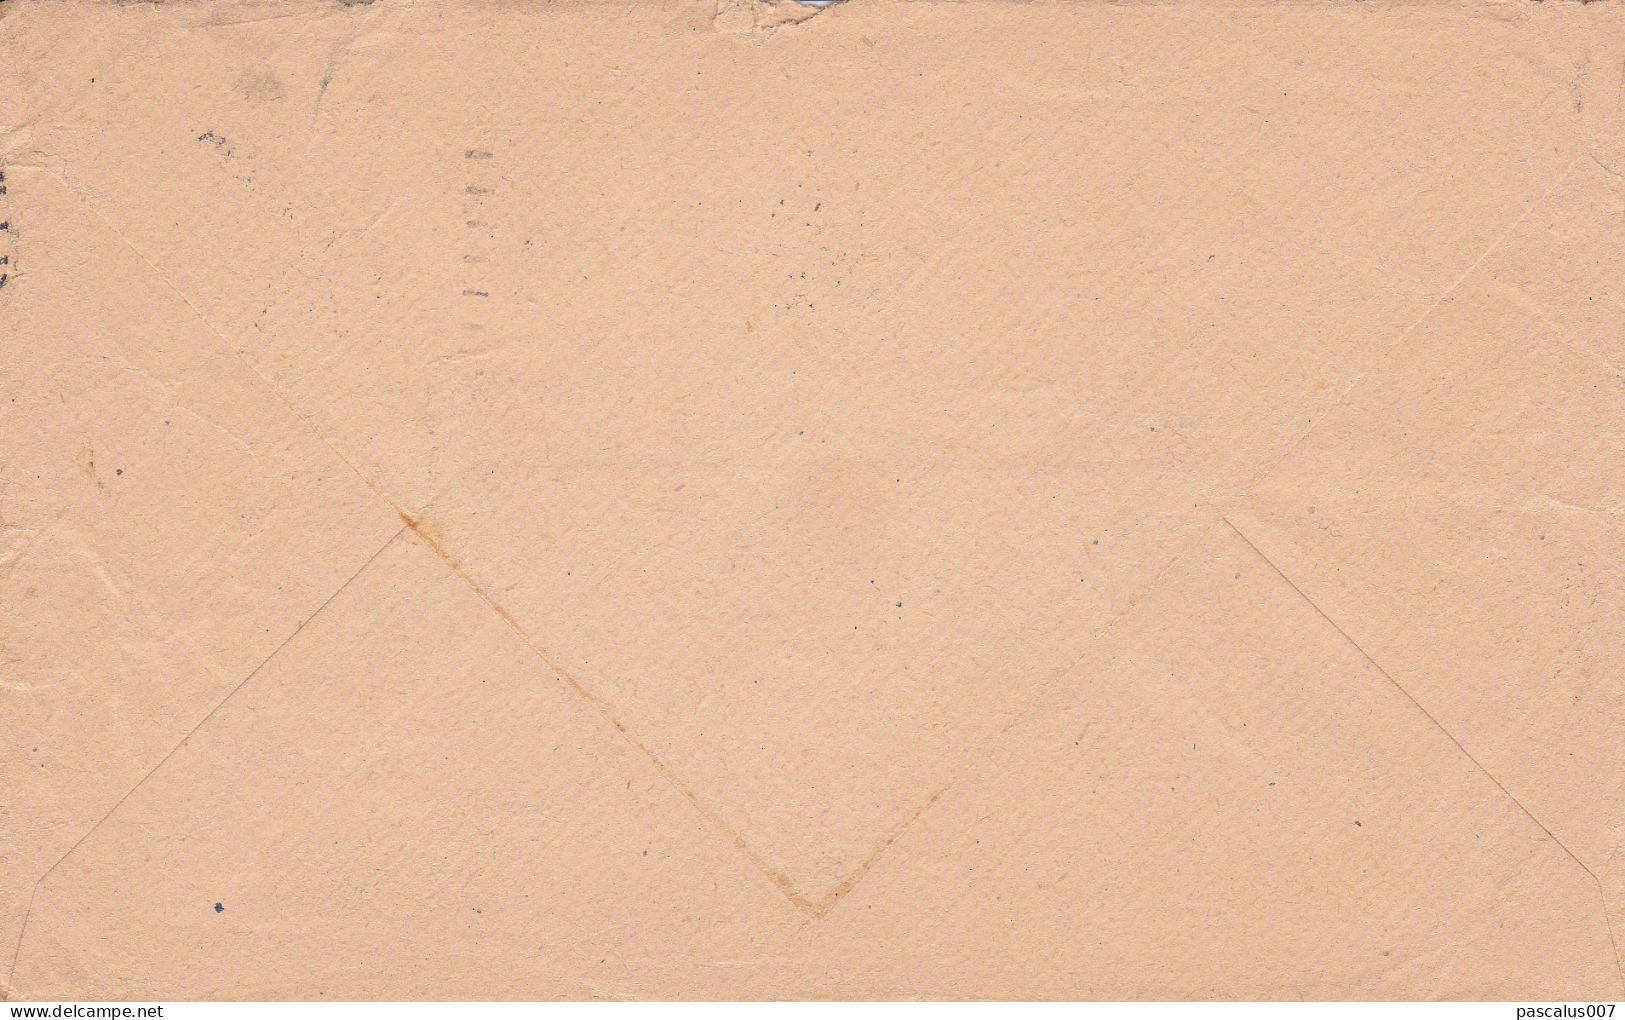 B01-423 Enveloppe Angleterre Avec Taxe De Epsom Surrey Vers Wellin 07-10-1945 - Courrier De Notaire - Brieven En Documenten